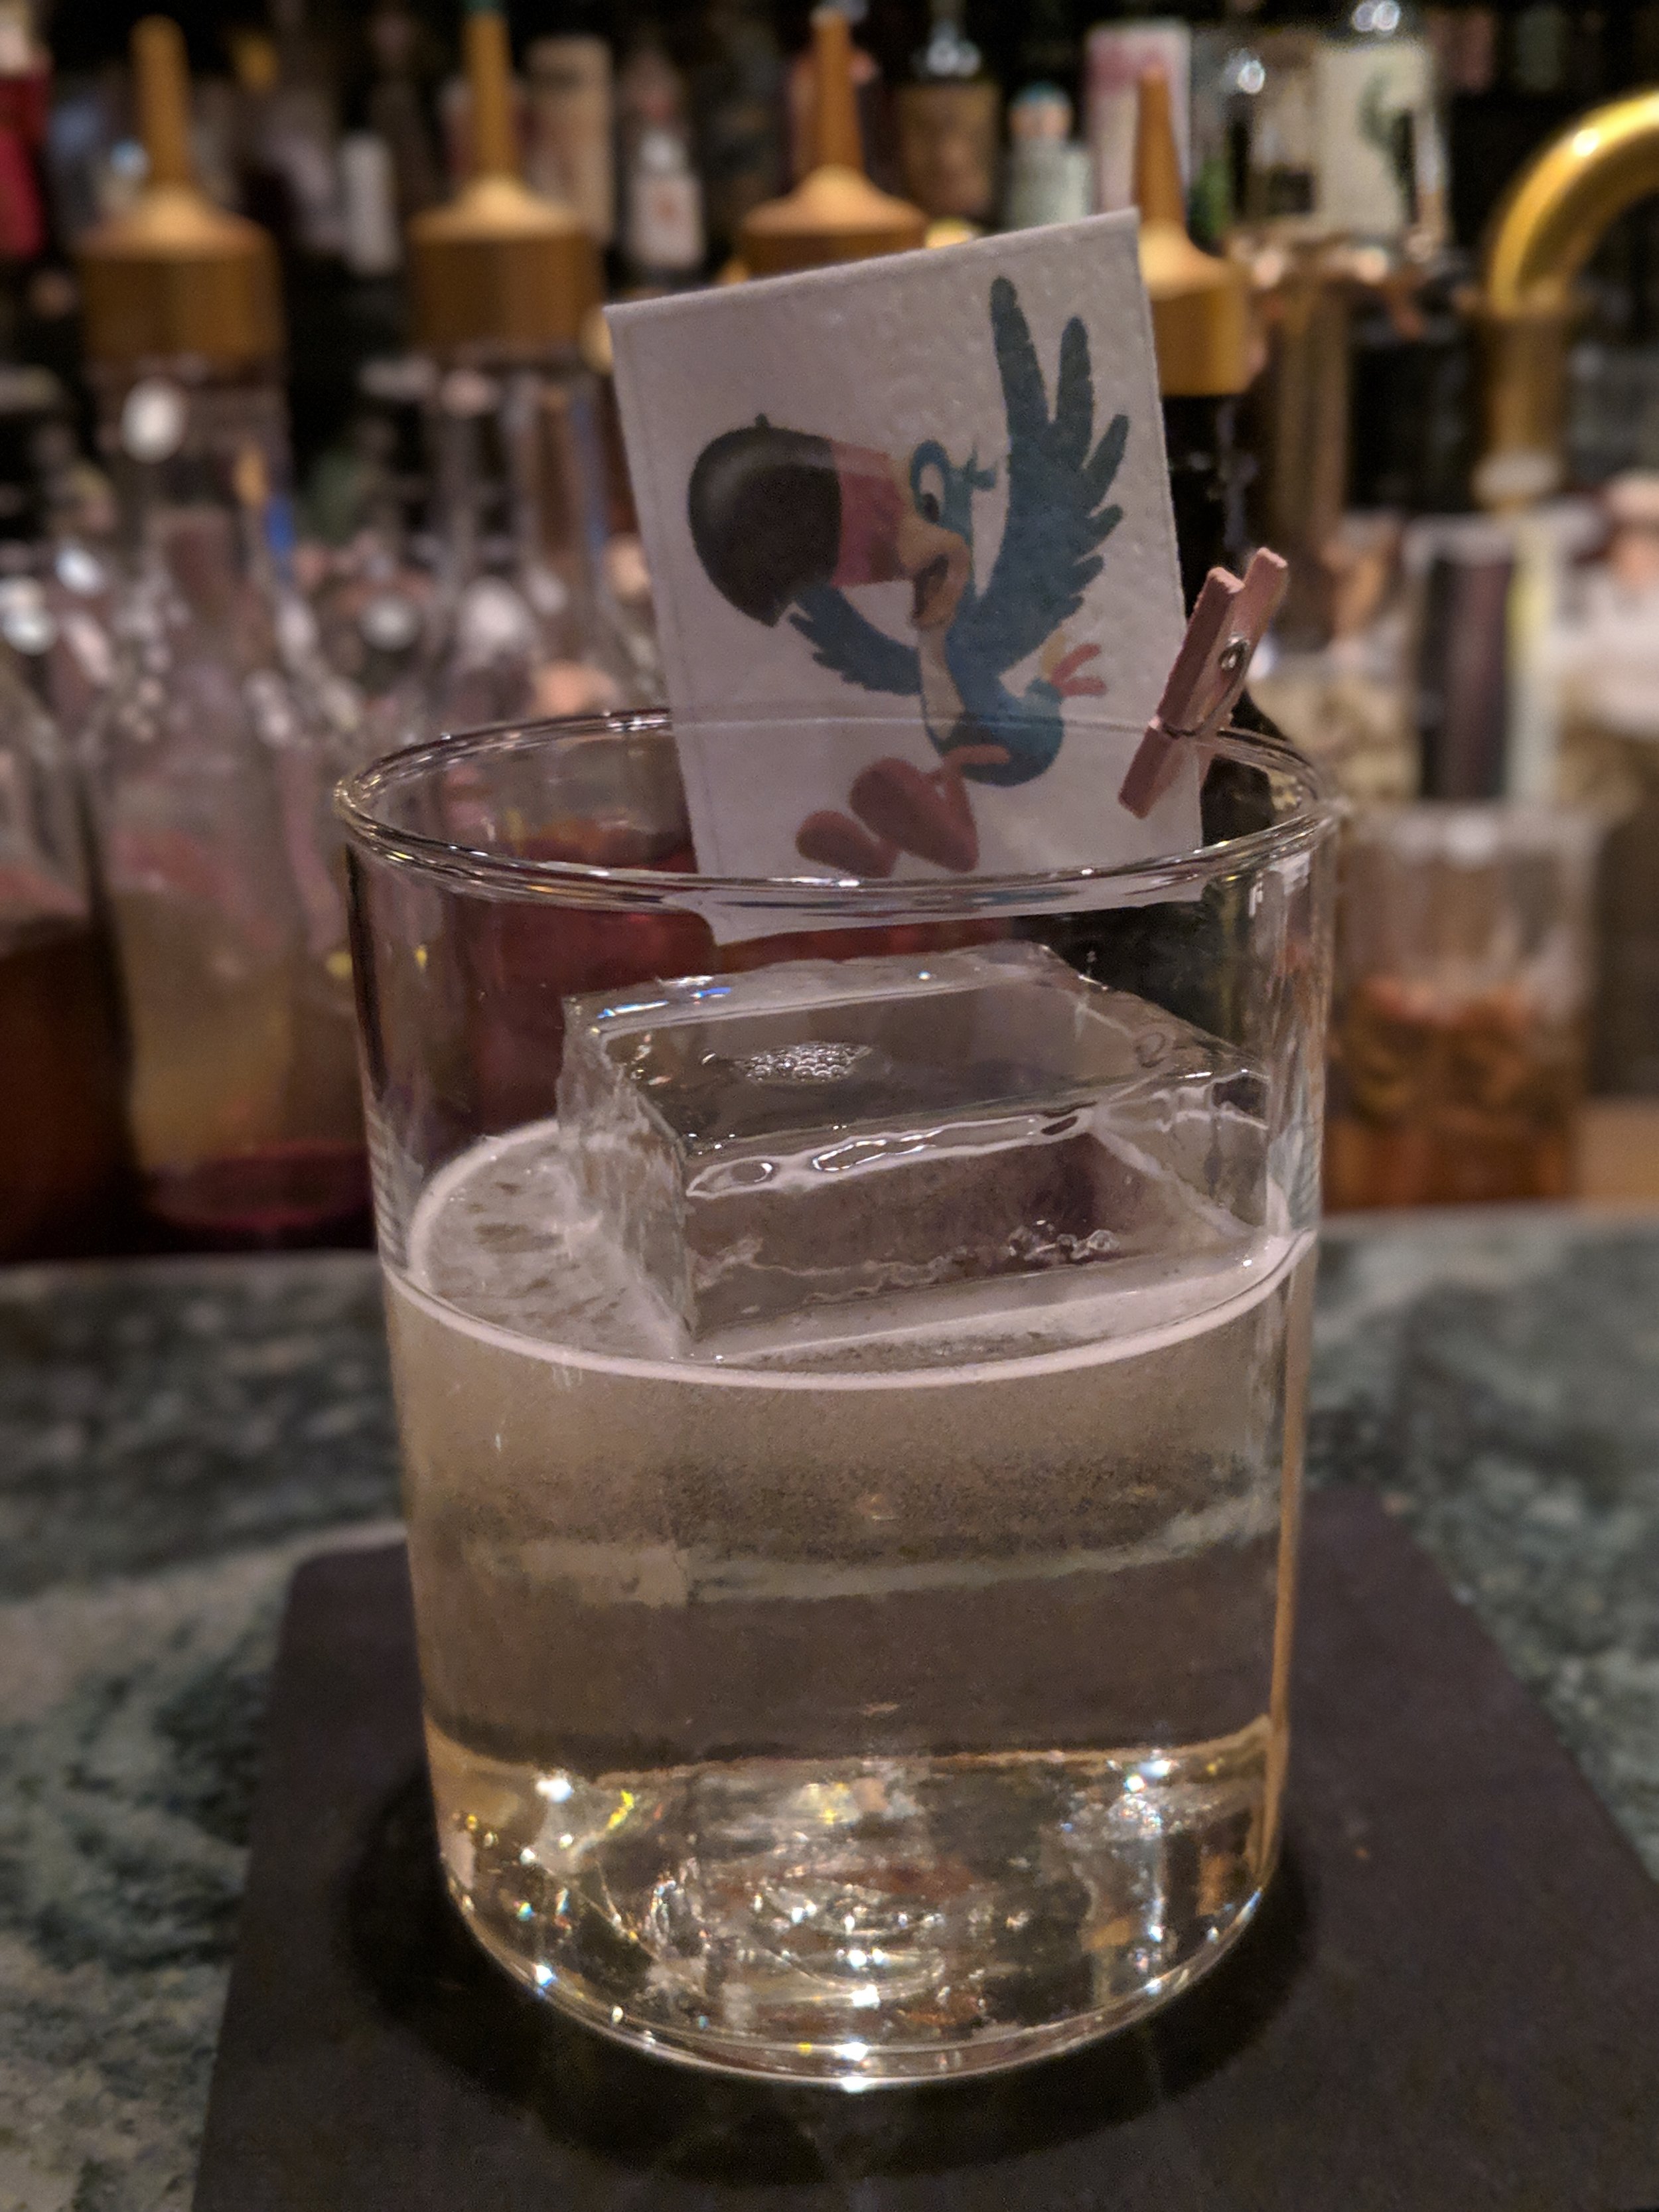 Atwater Cocktail Club. Saint-Henri, a Montreal neighbourhood guide